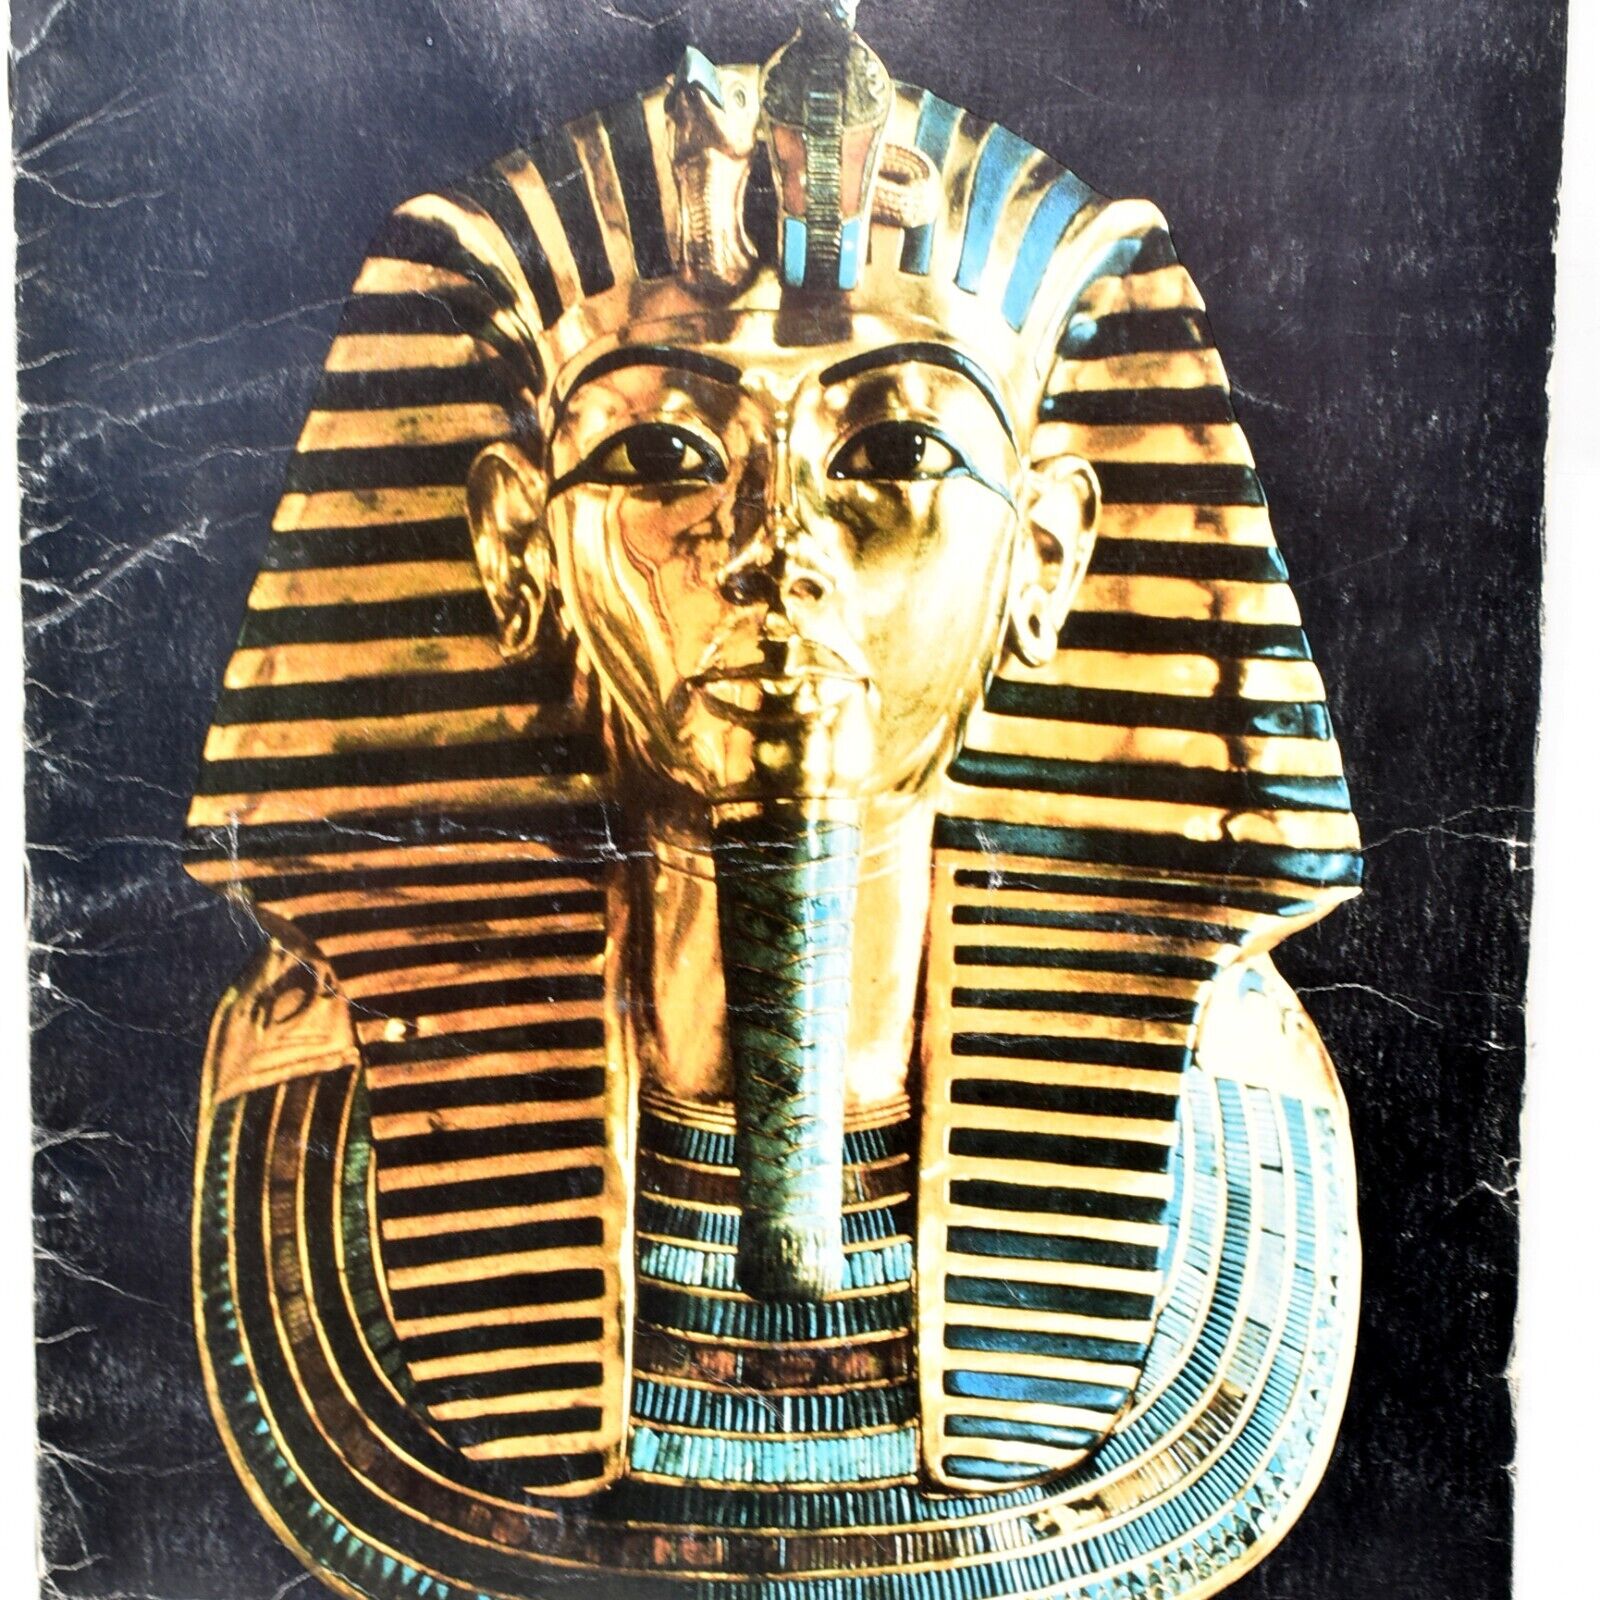 1978 King Tut Tutankhamun Restaurant Menu Exhibition Space Needle Seattle WA